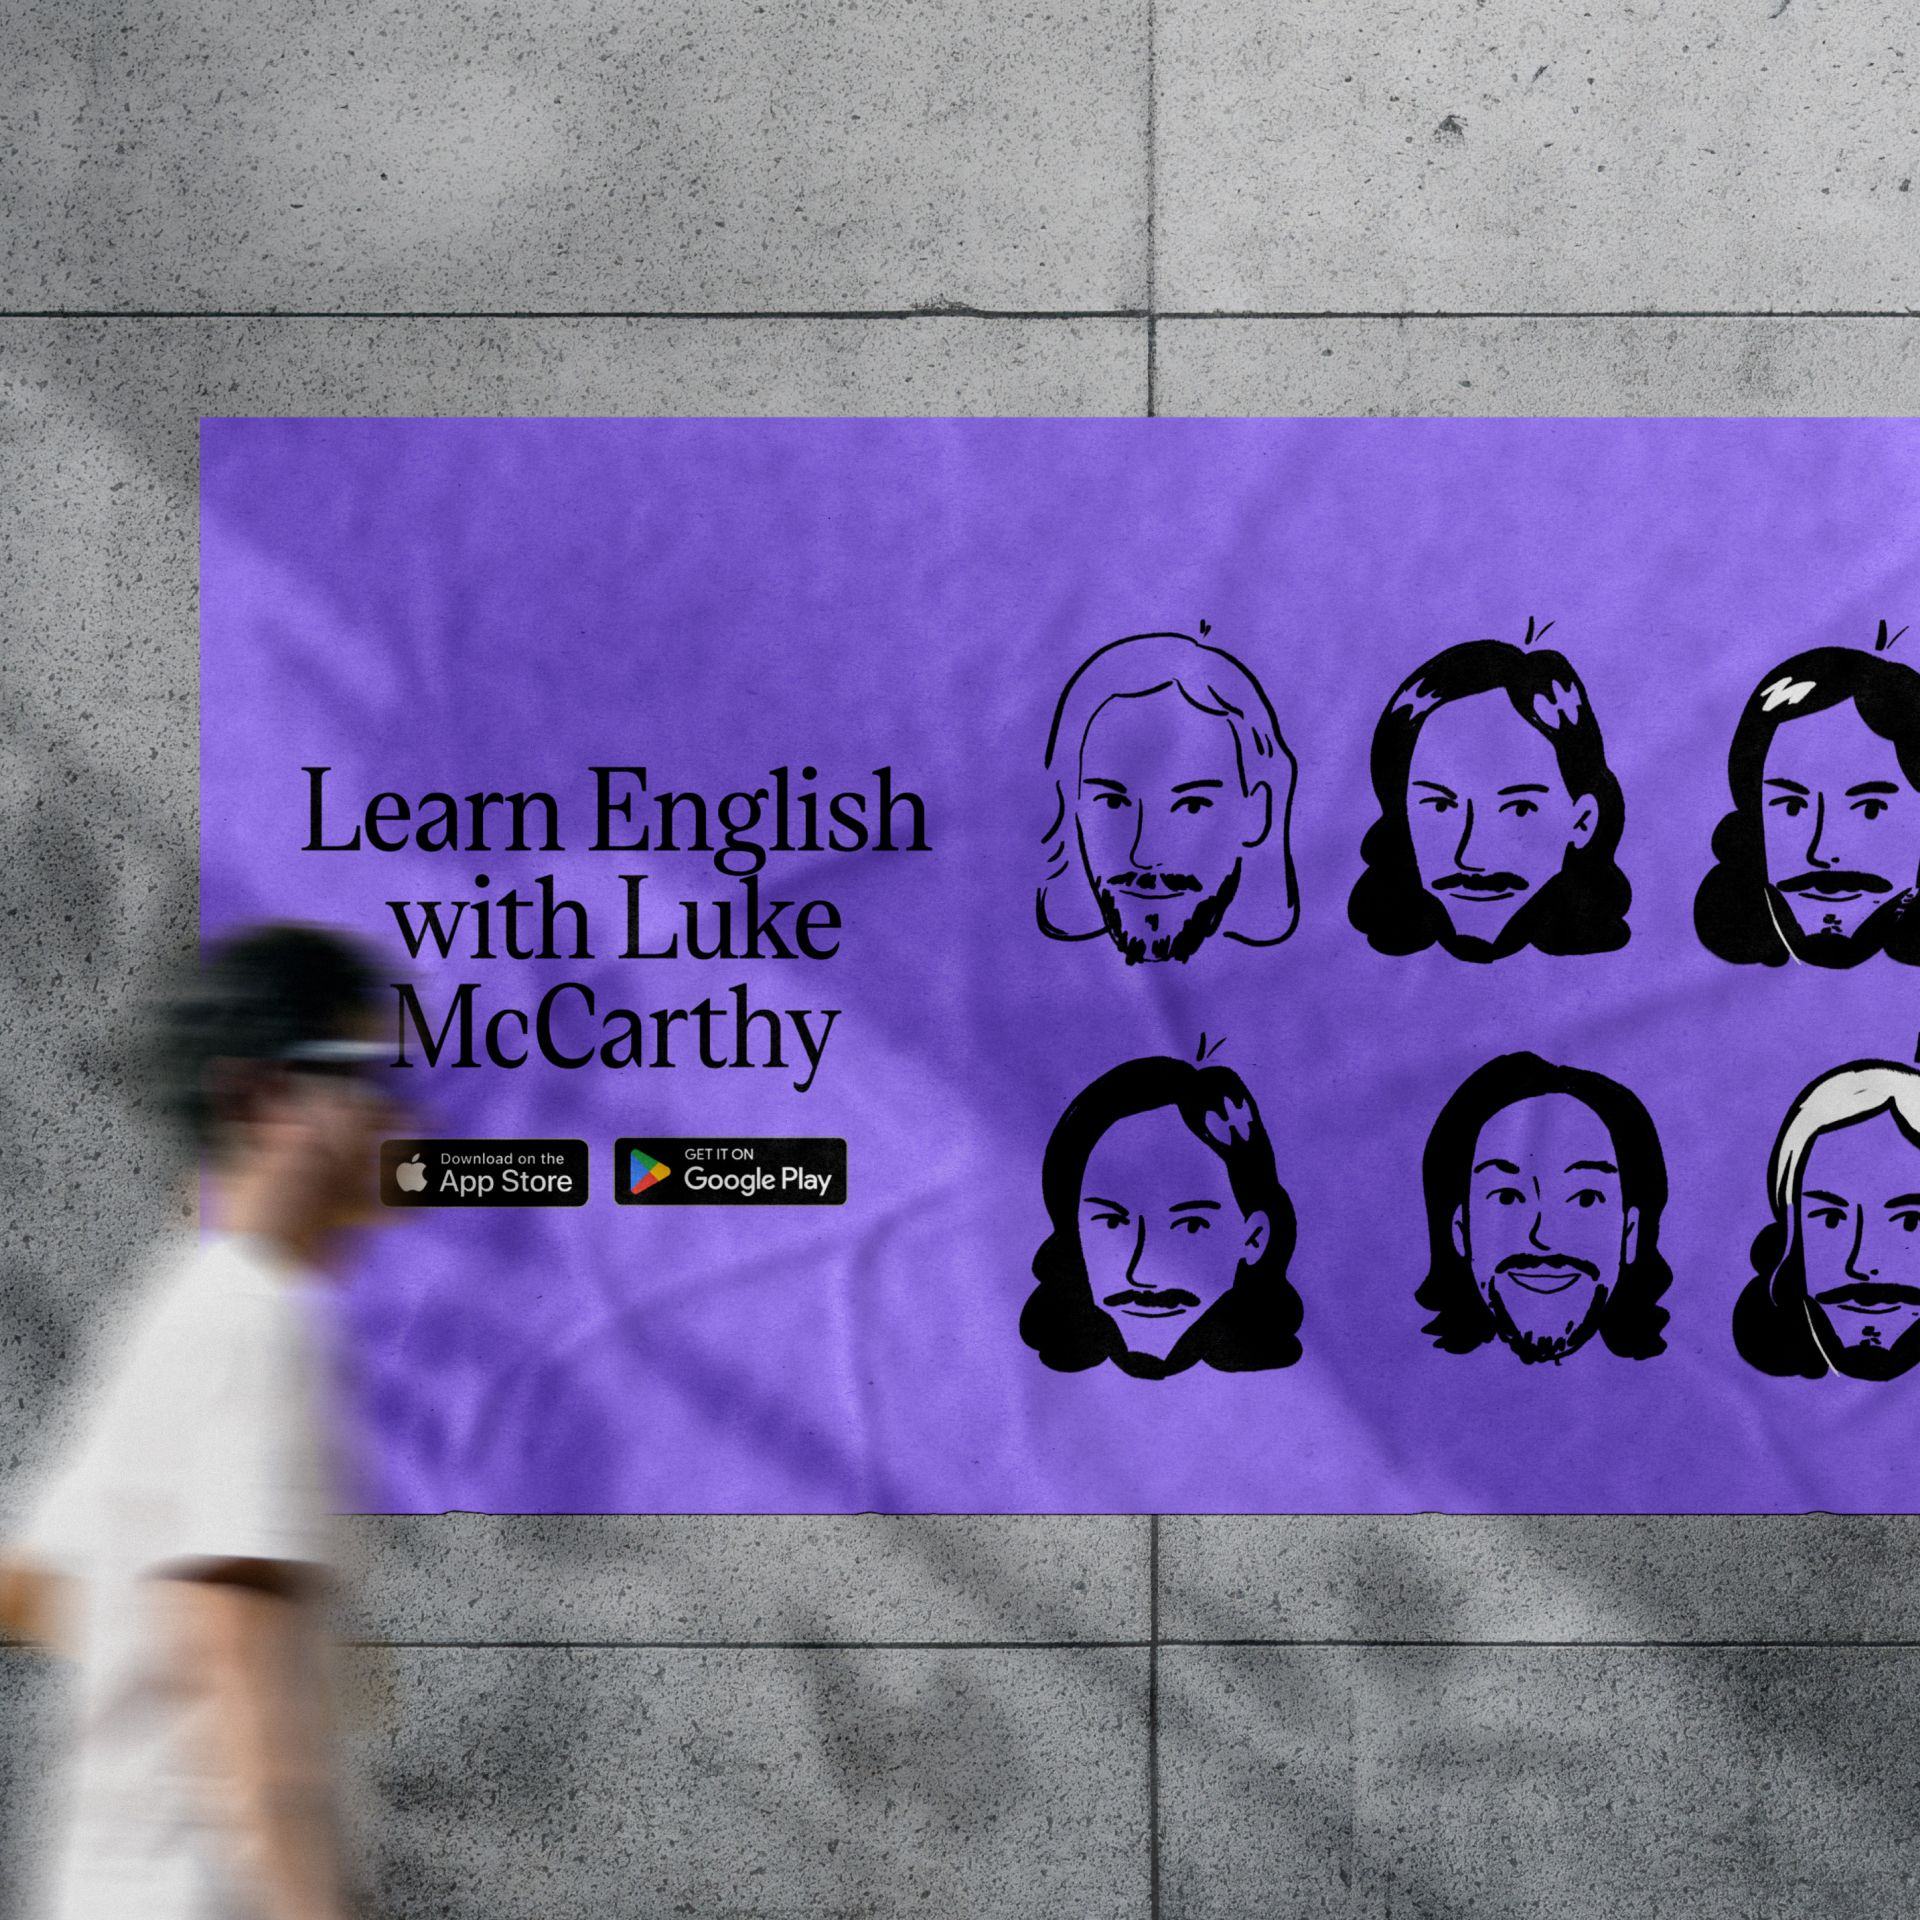 Luke & English App for learning English